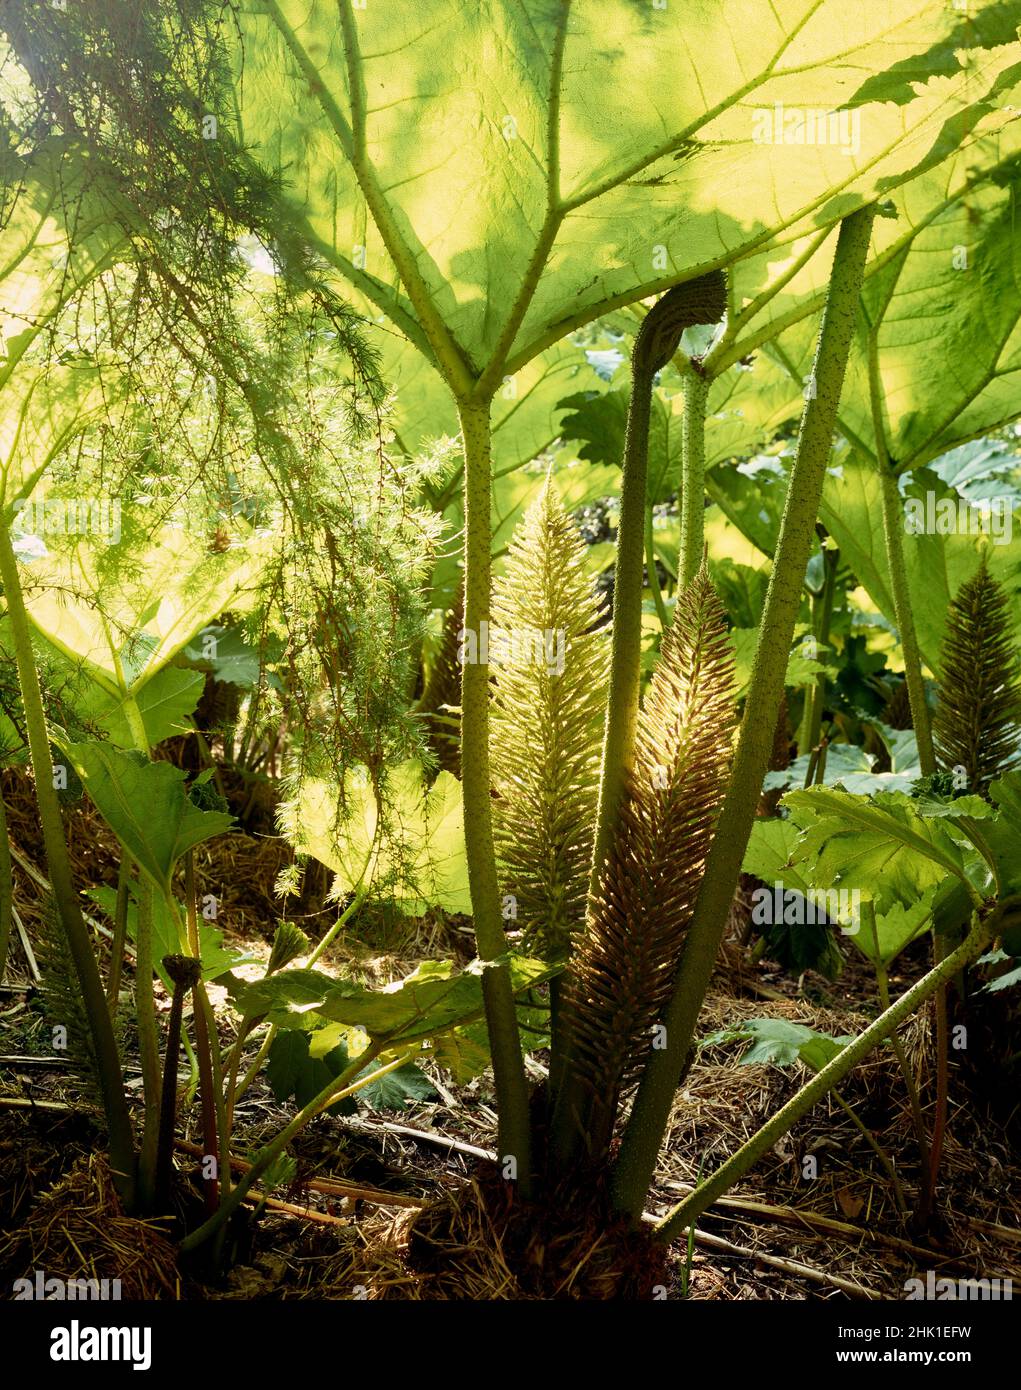 Stunning Gunnera plant in good light, natural close-up plat portrait Stock Photo